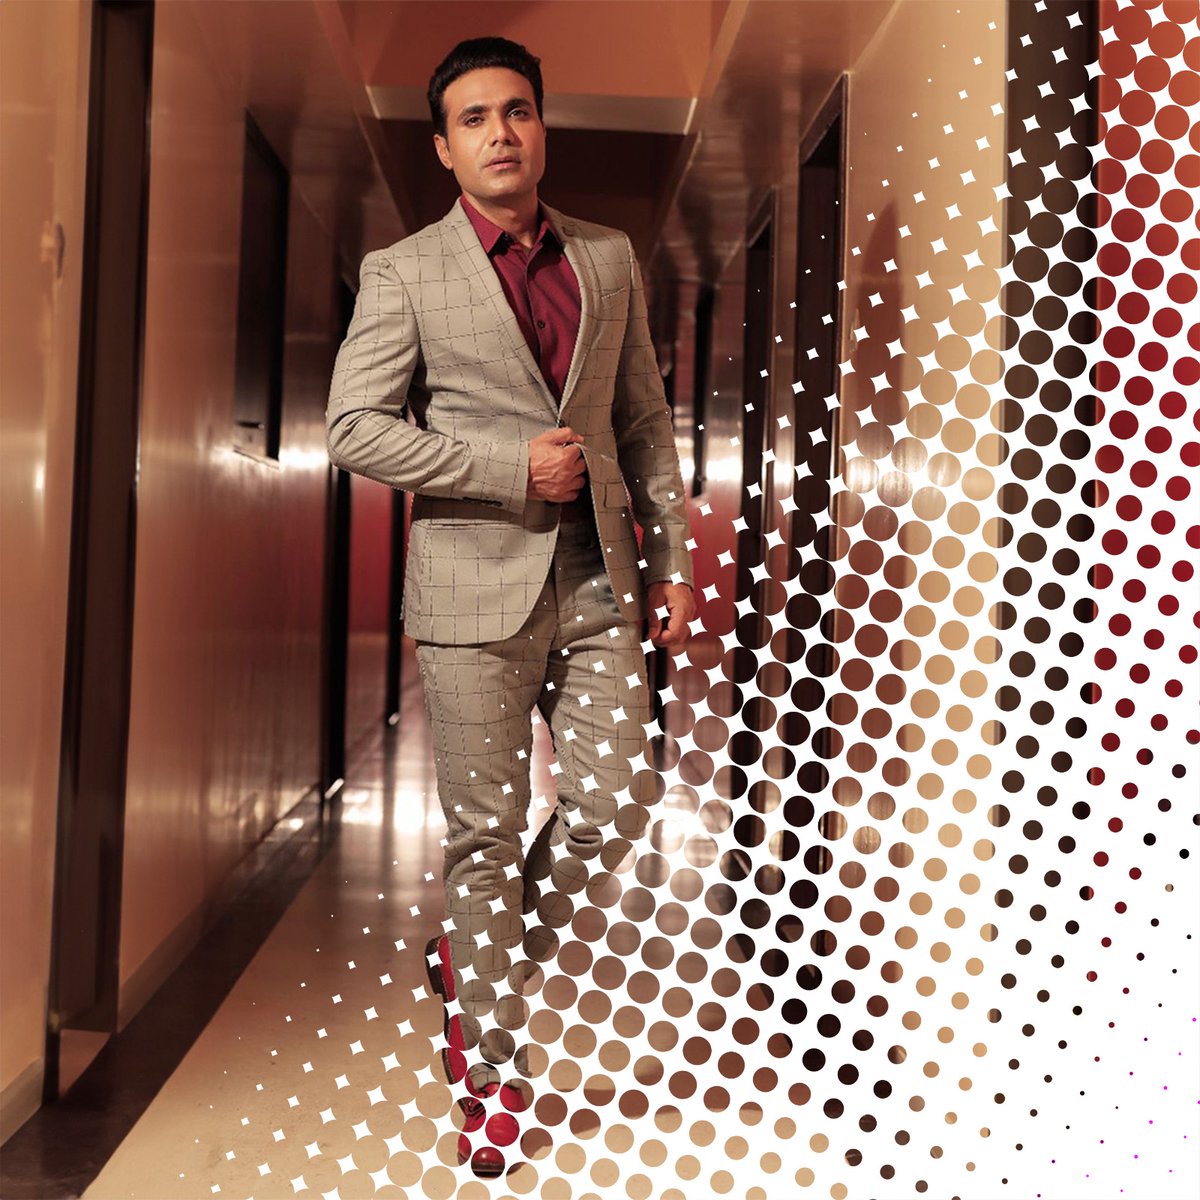 A Suit is the uniform of Success & Elegance

#SuitStyle #gentlelook #beinggentleman #suitgram #success #elegance #discipline #beingfocused🎯  #actorlife #salimdiwan #themood